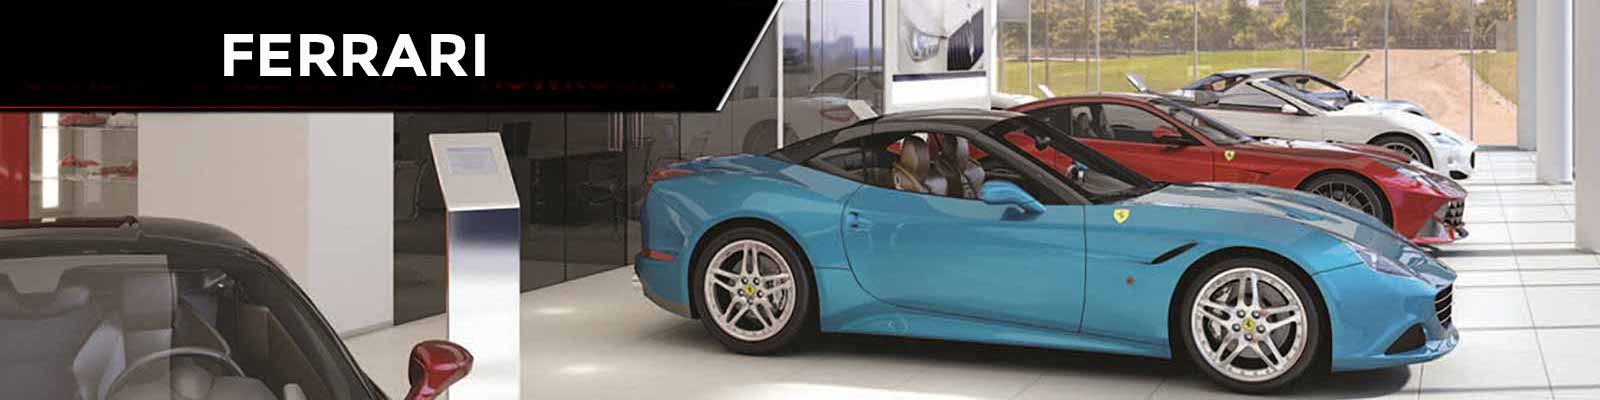 Ferrari Cars In India Upcoming Ferrari Cars Models Price News